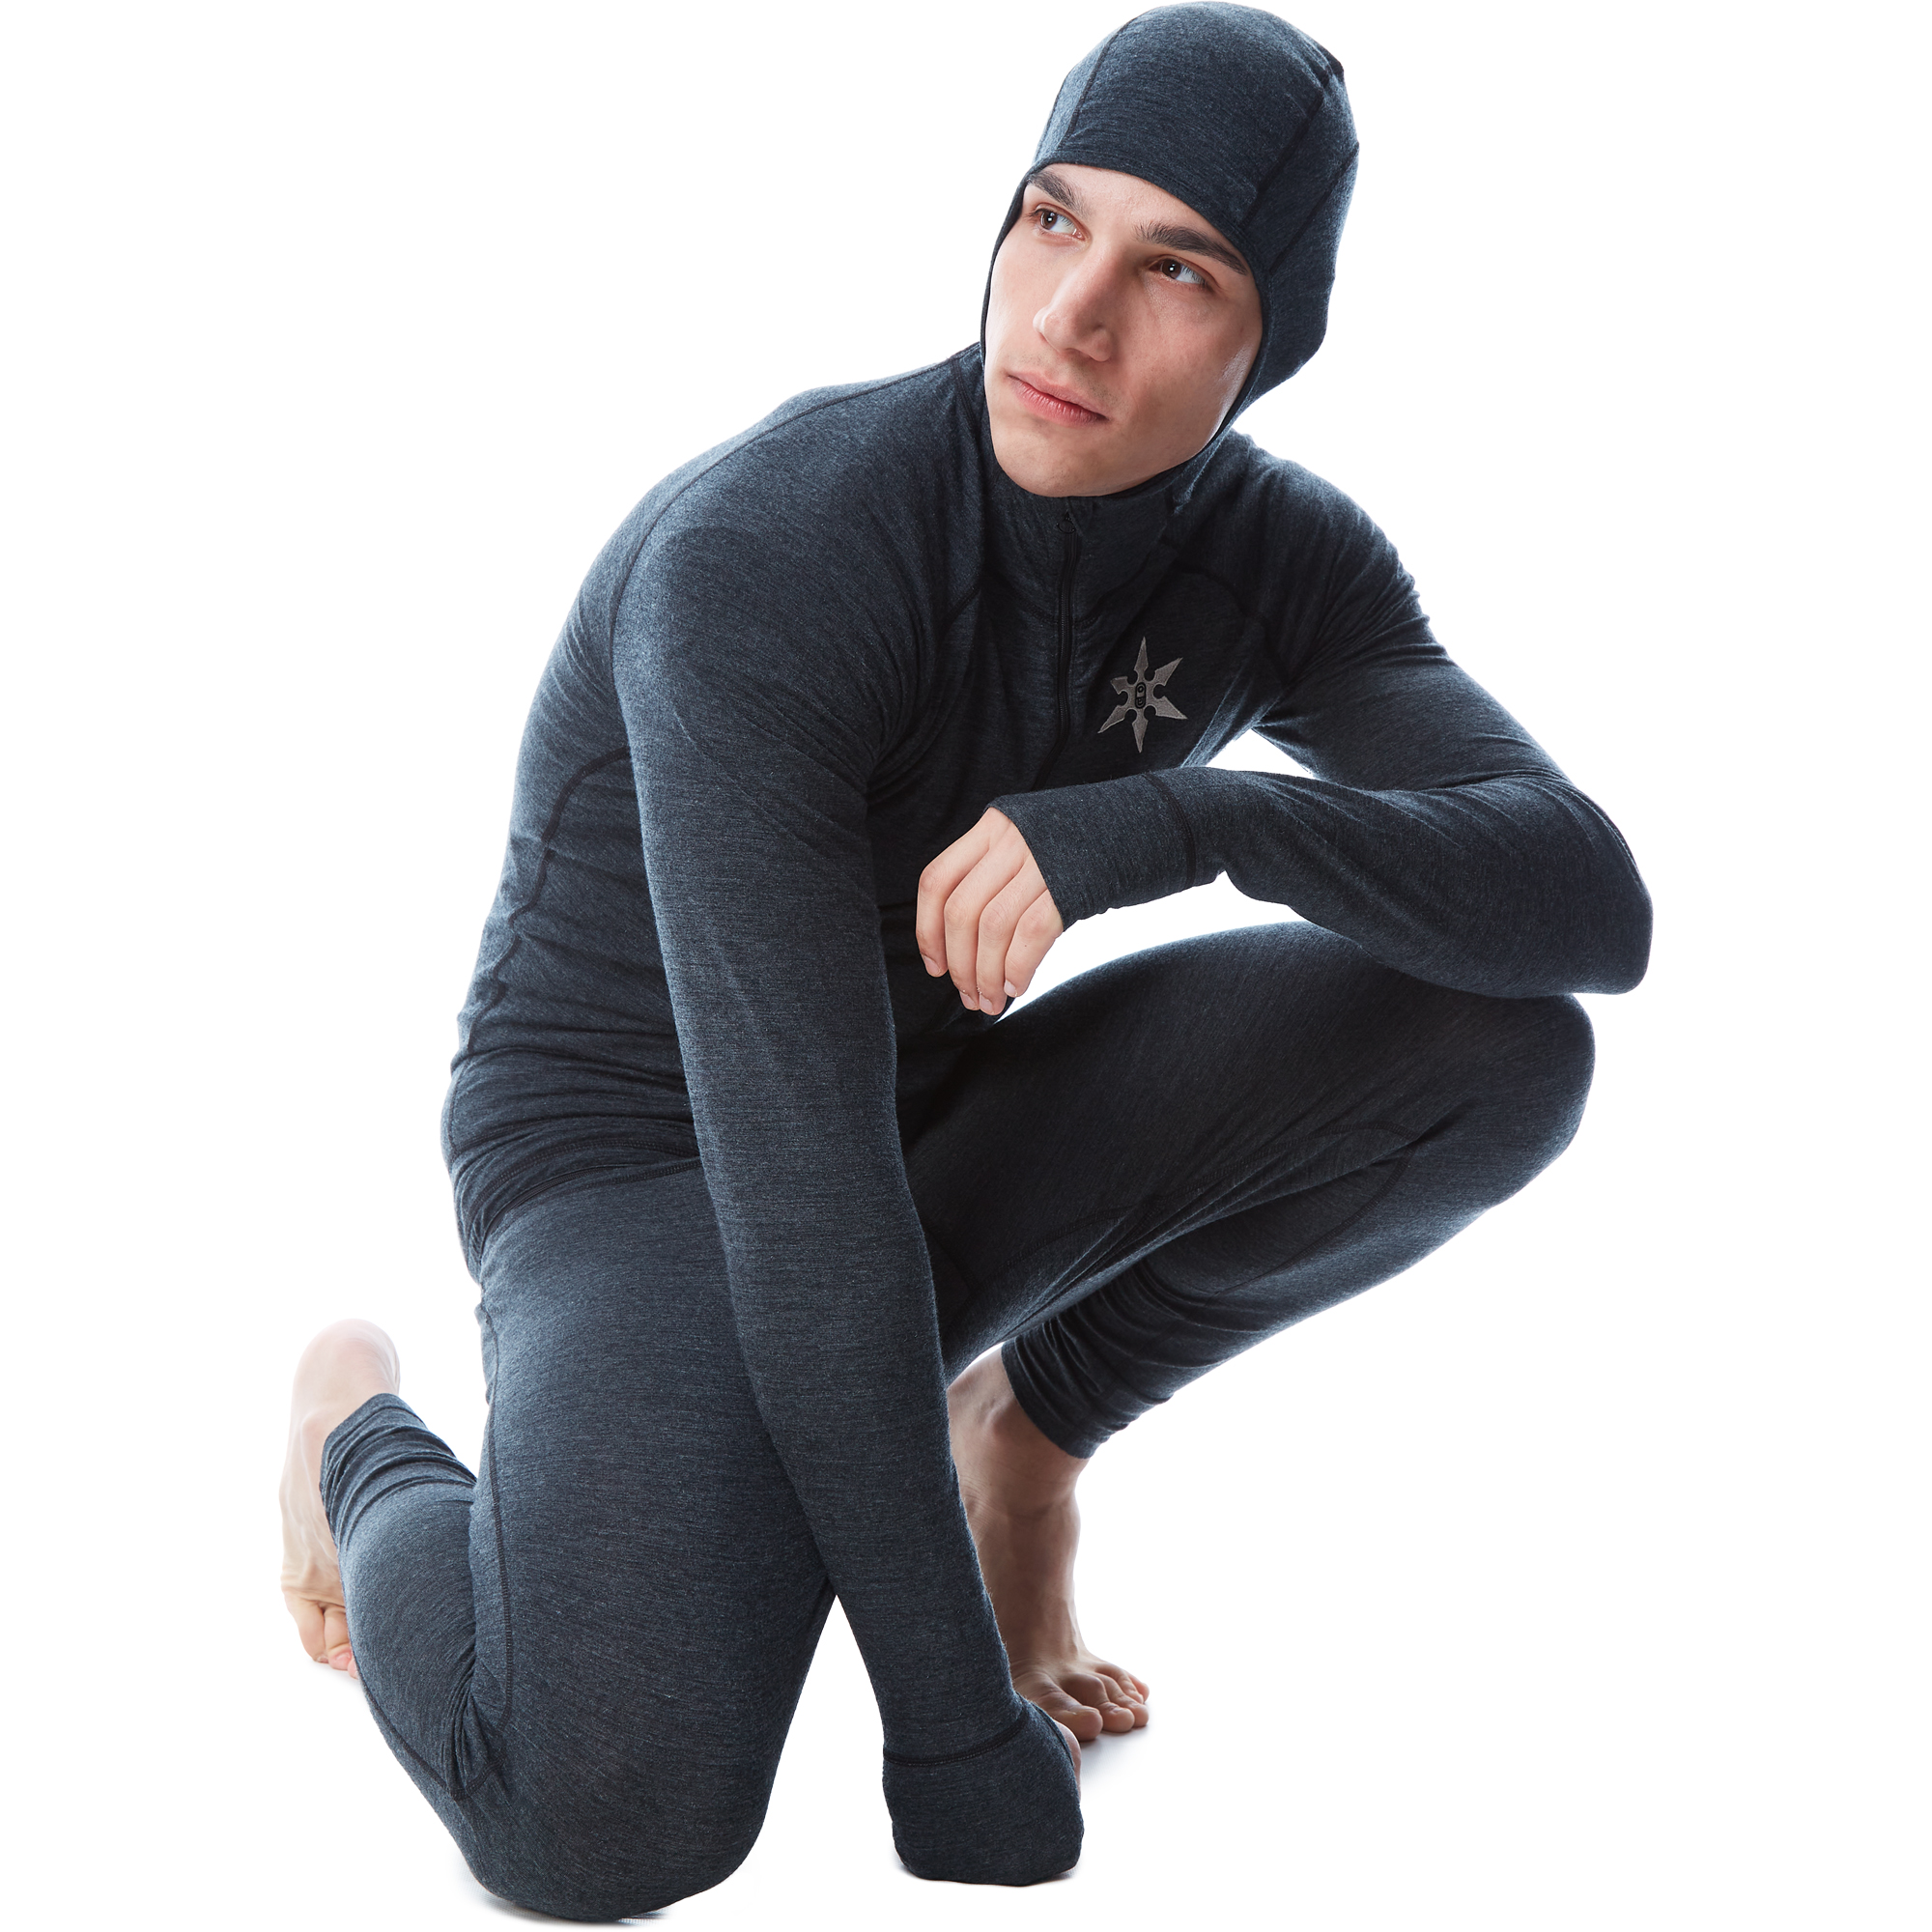 Airblaster Merino Ninja Suit Hooded Thermal Base Layer